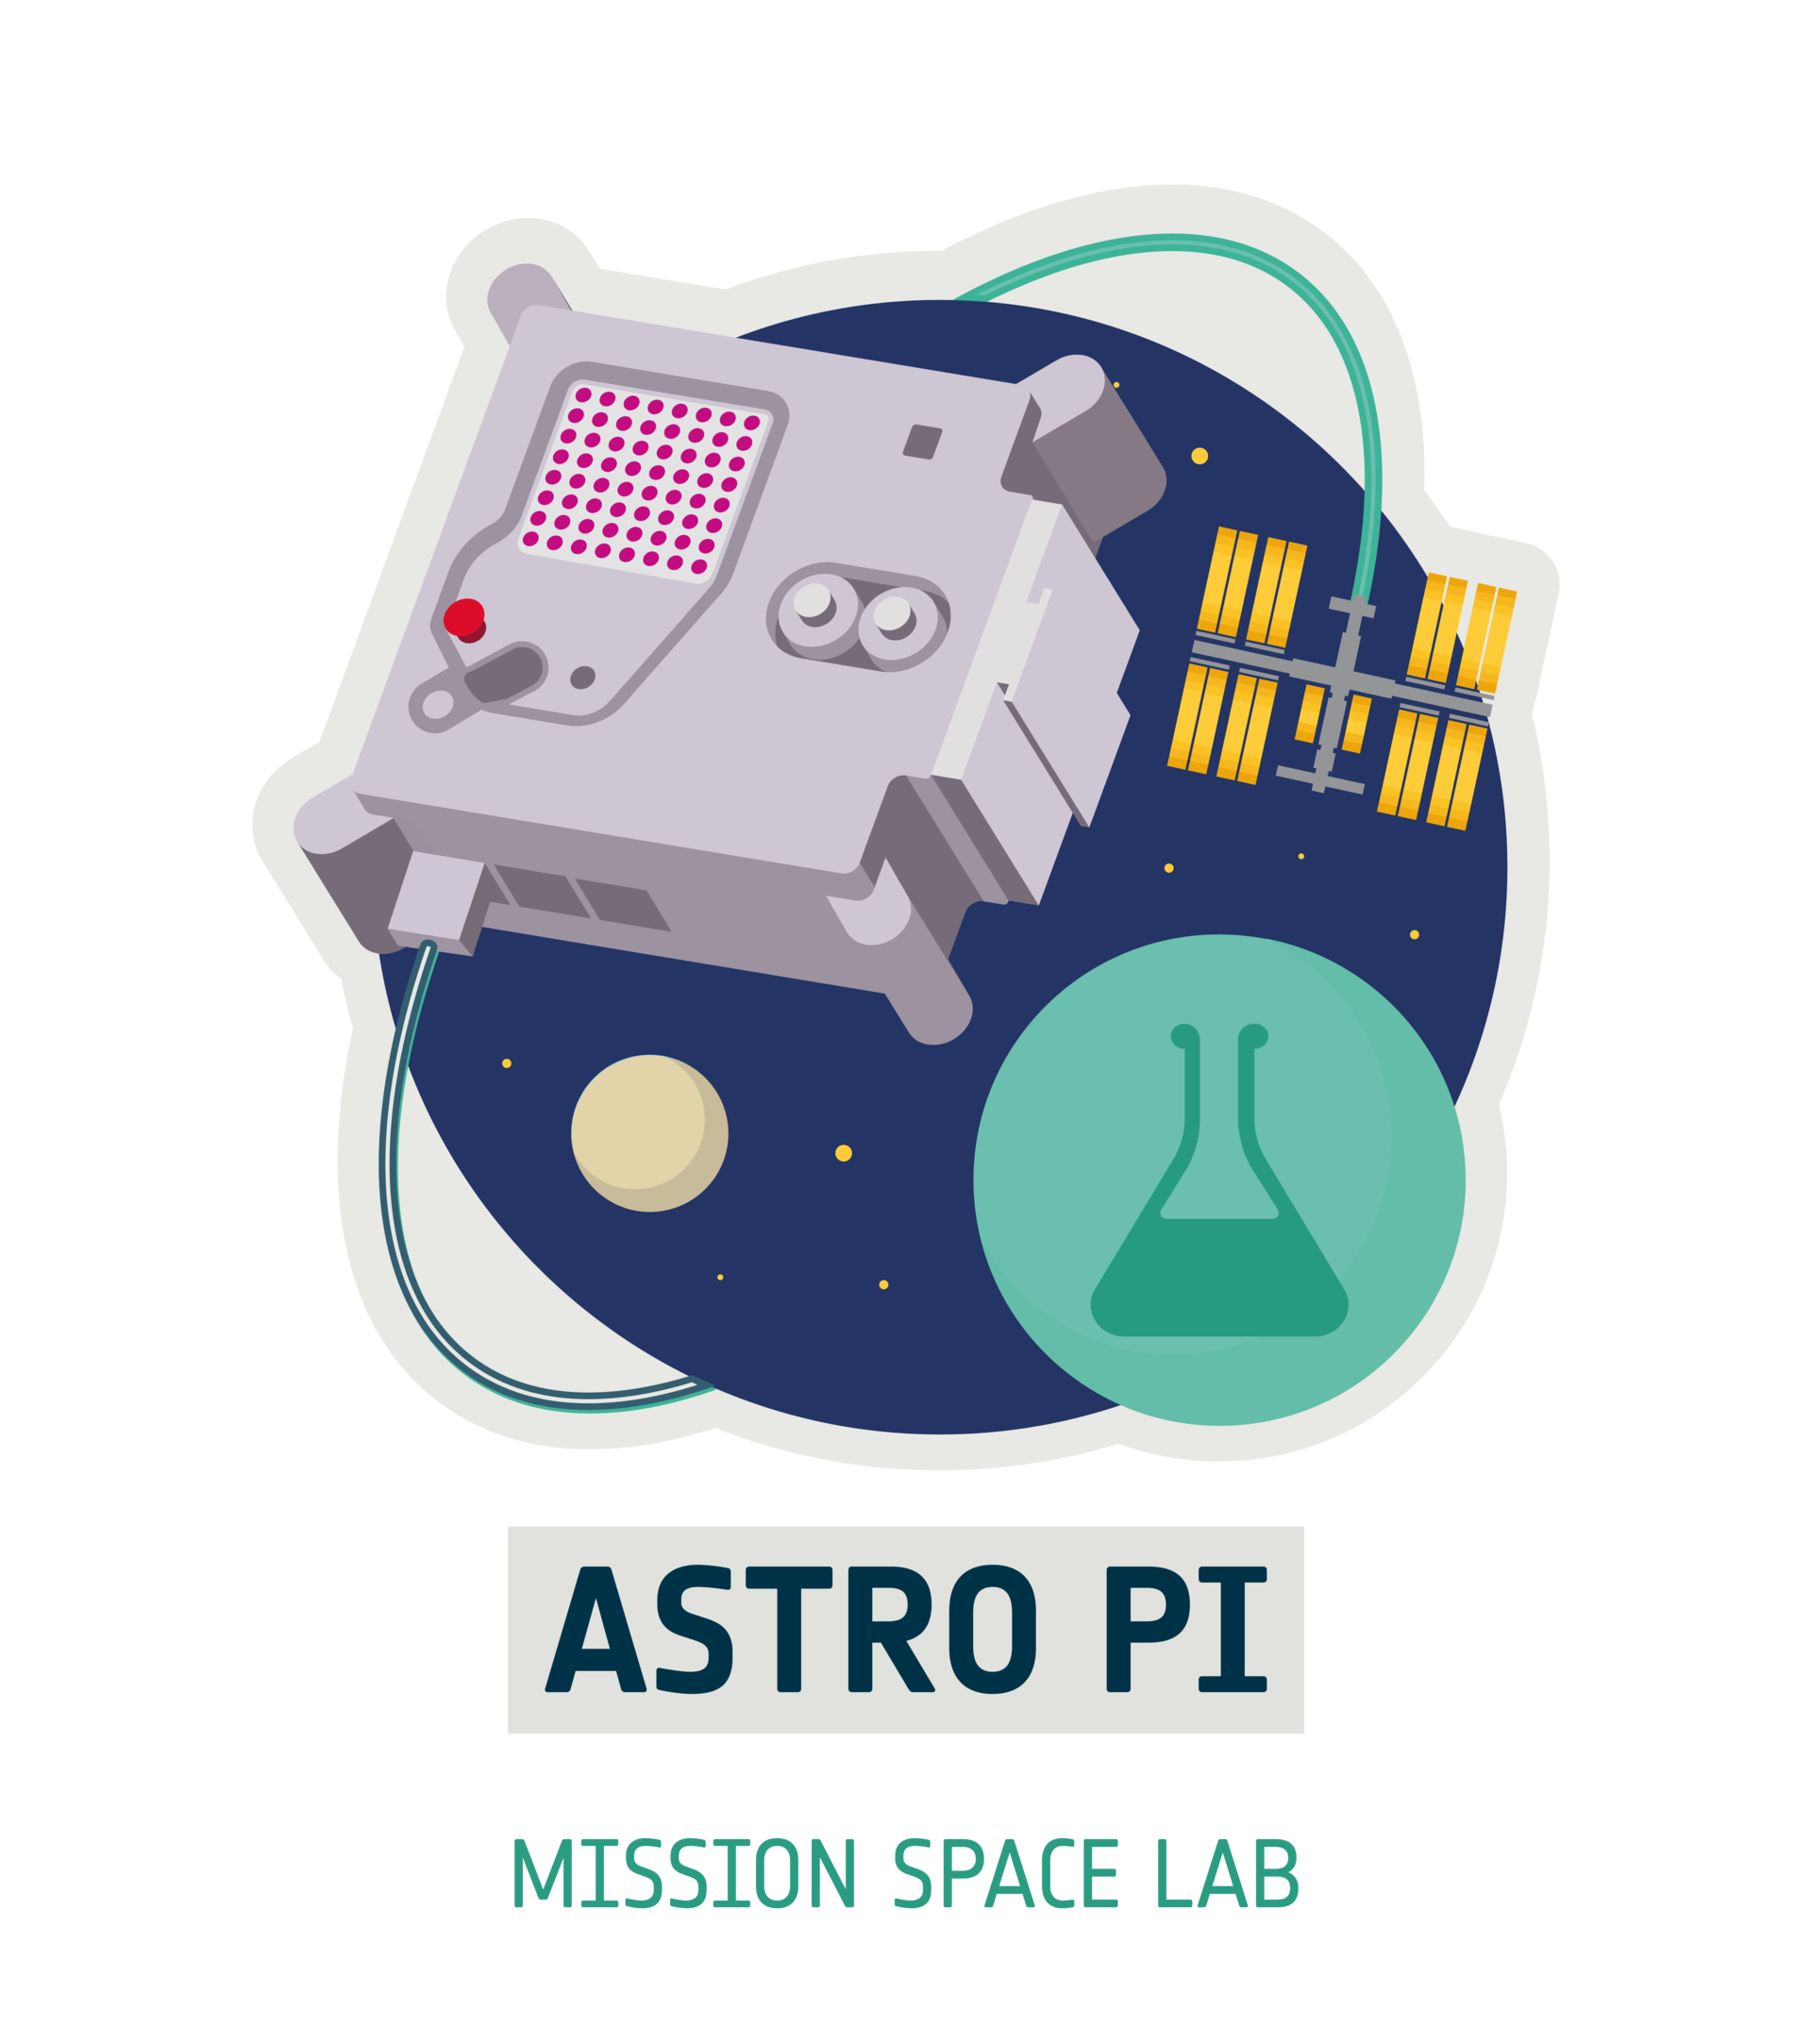 Astro Pi Mission Space Lab key visual 